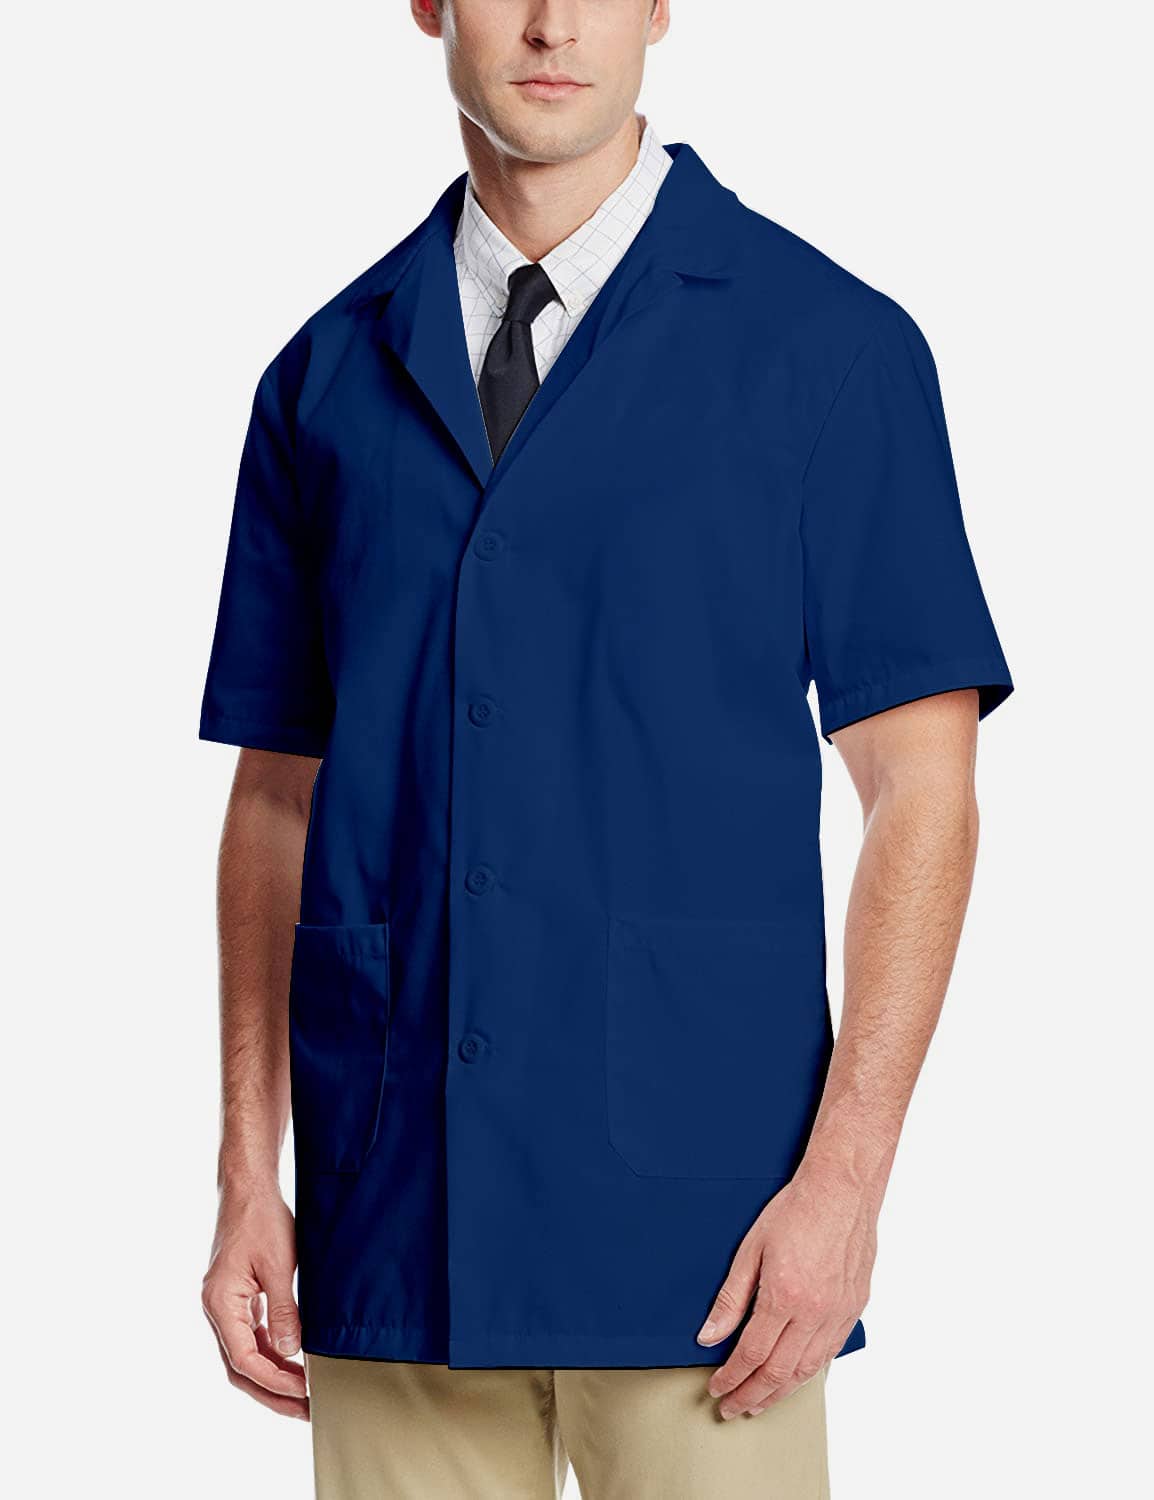 Navy Blue Lab Coat - Half Sleeve